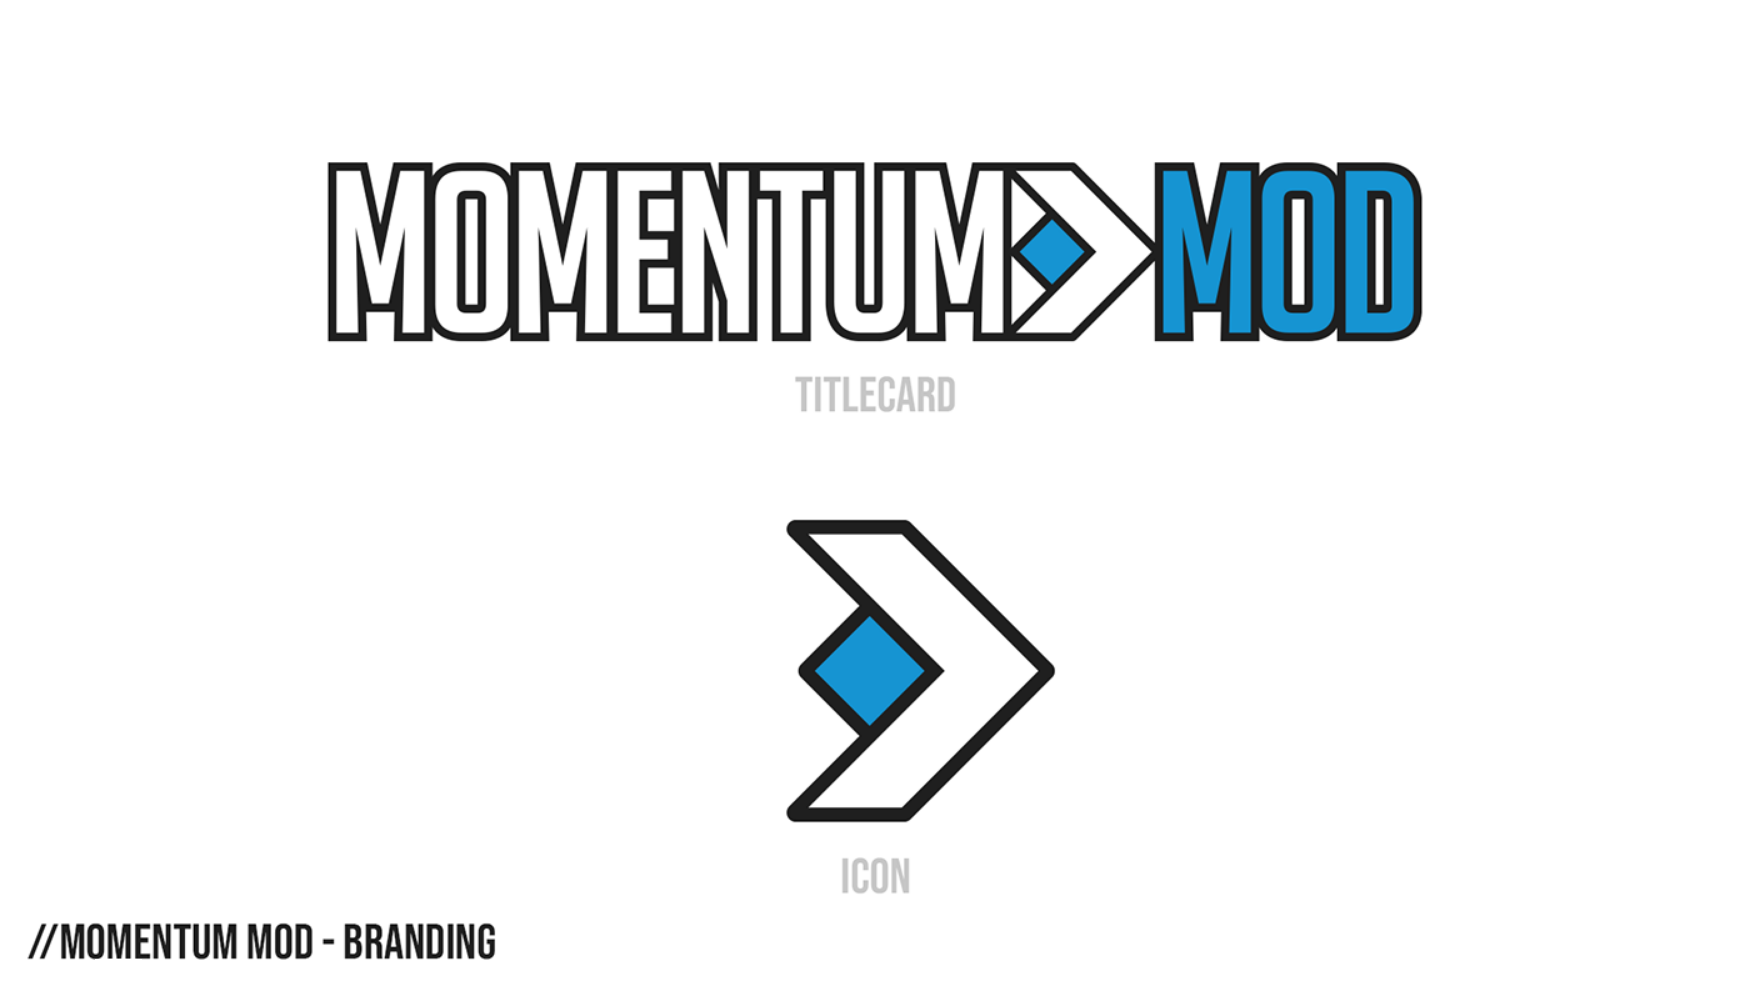 Momentum Mod's new logo and titlecard visual identity